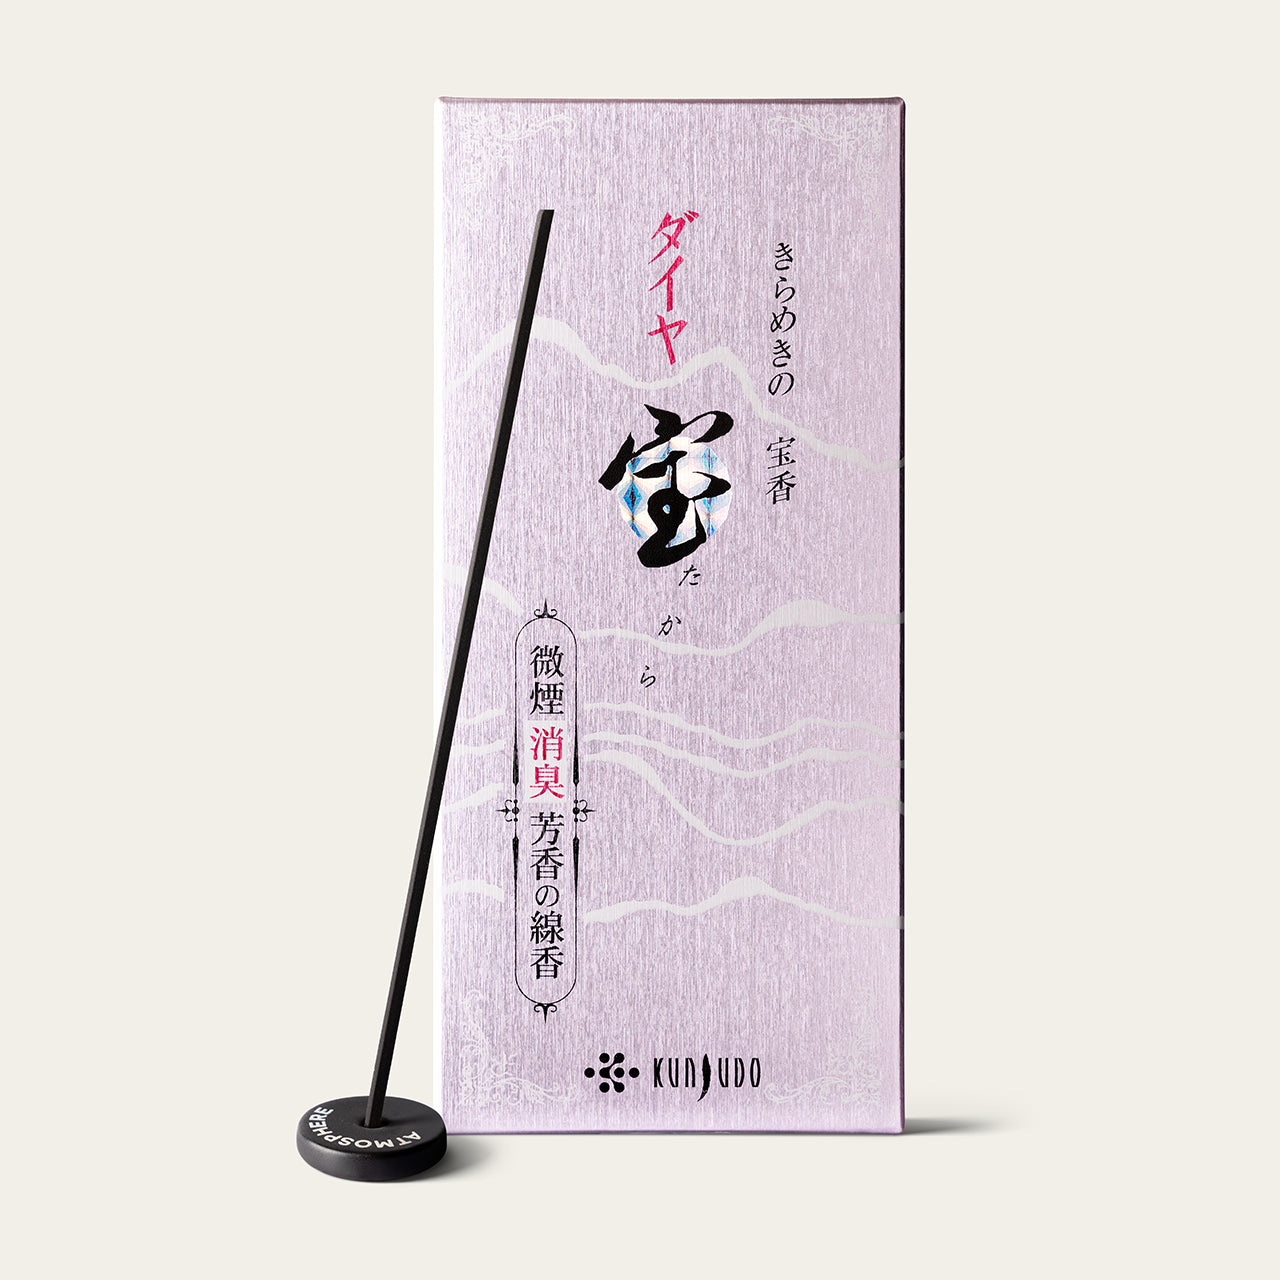 Kunjudo Diamond Takara Japanese incense sticks (150 sticks) with Atmosphere ceramic incense holder